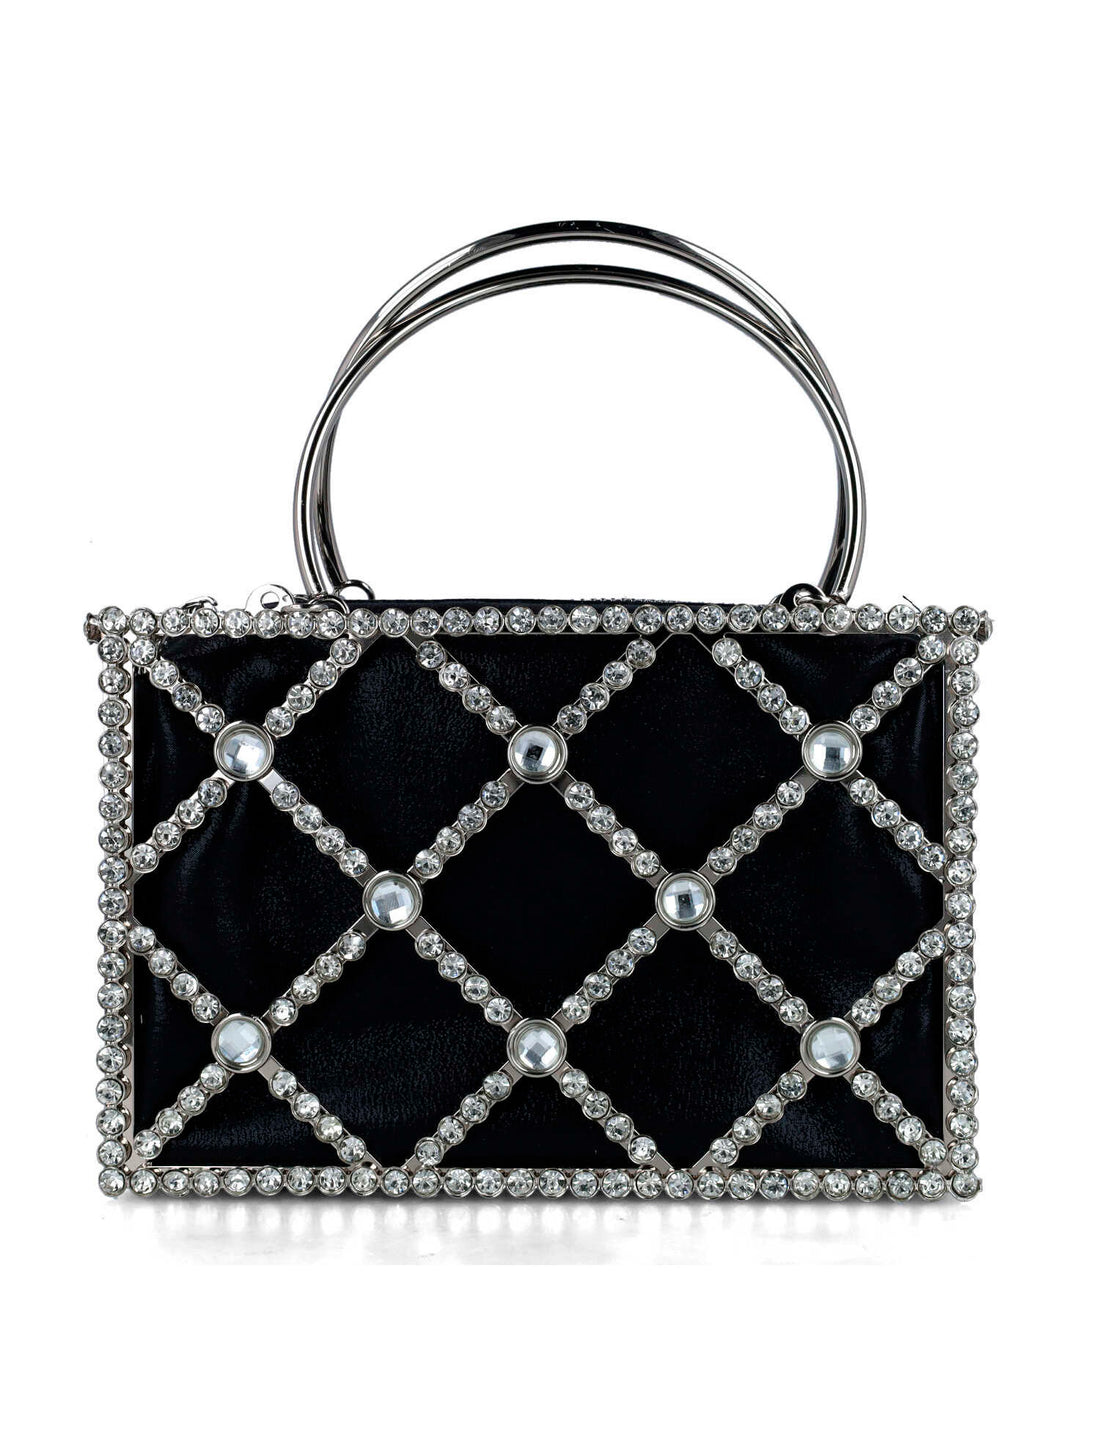 Embellished Square Handbag With Round Straps_85720_01_01